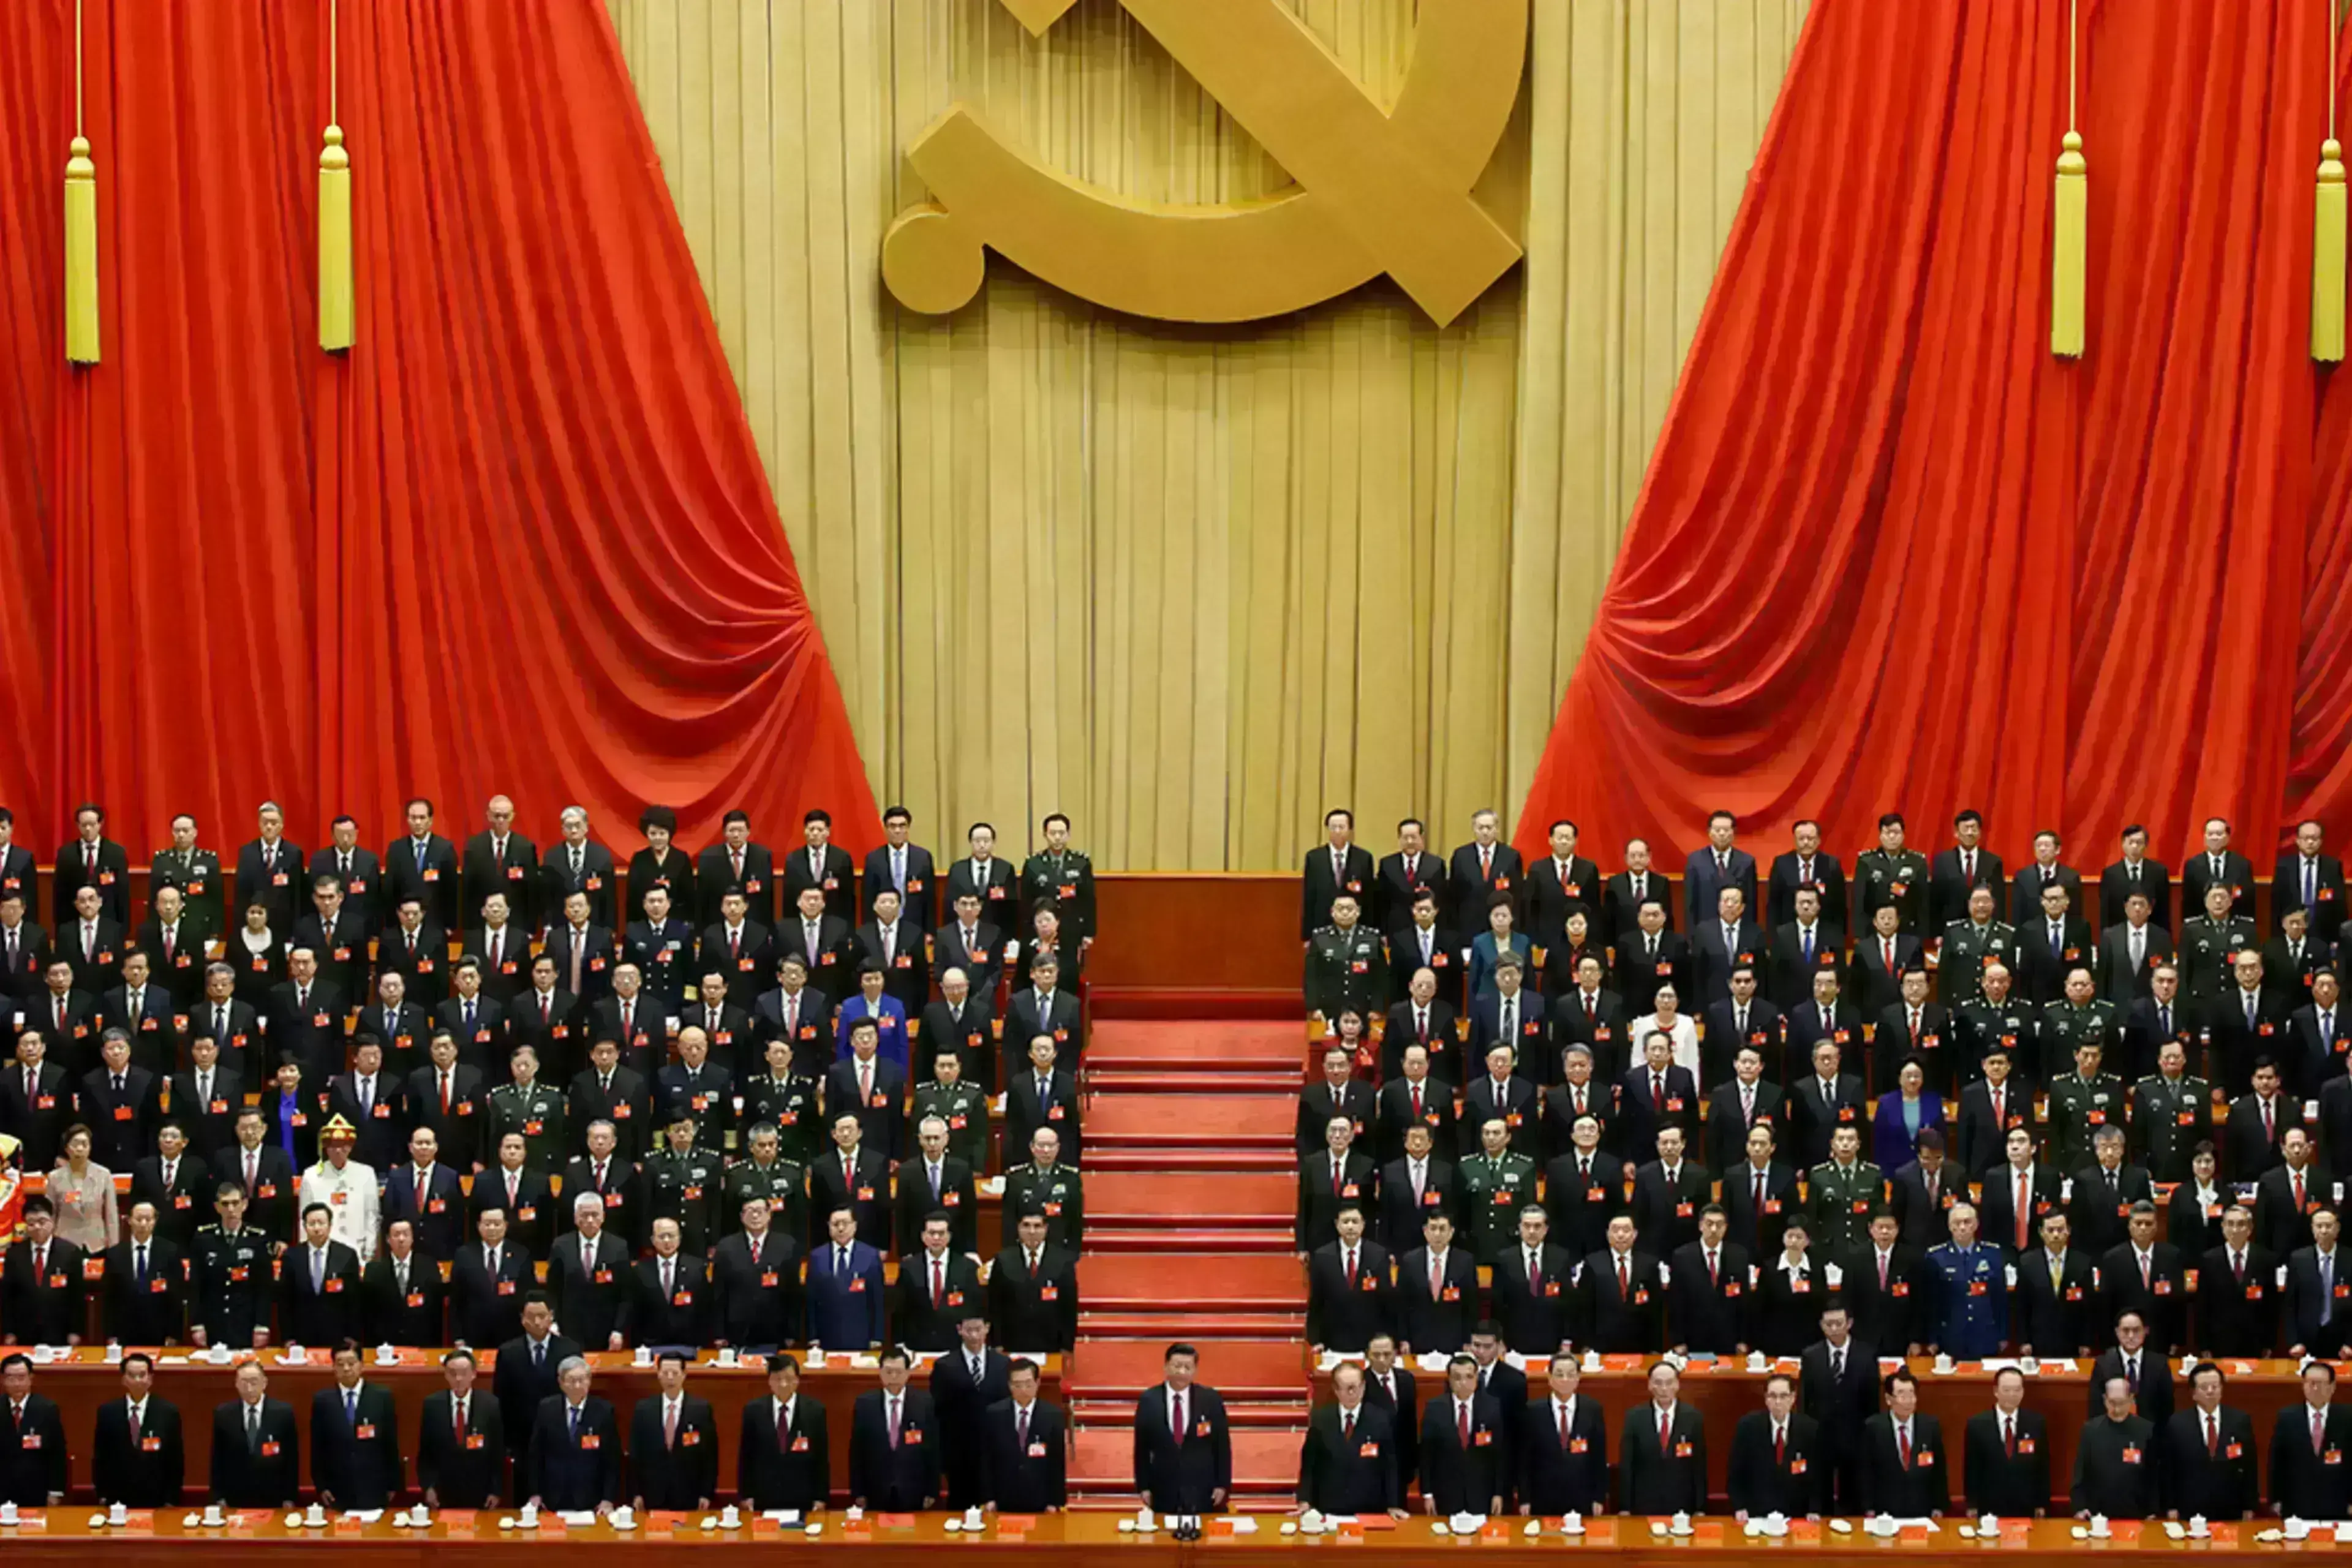 chinese communism wallpaper